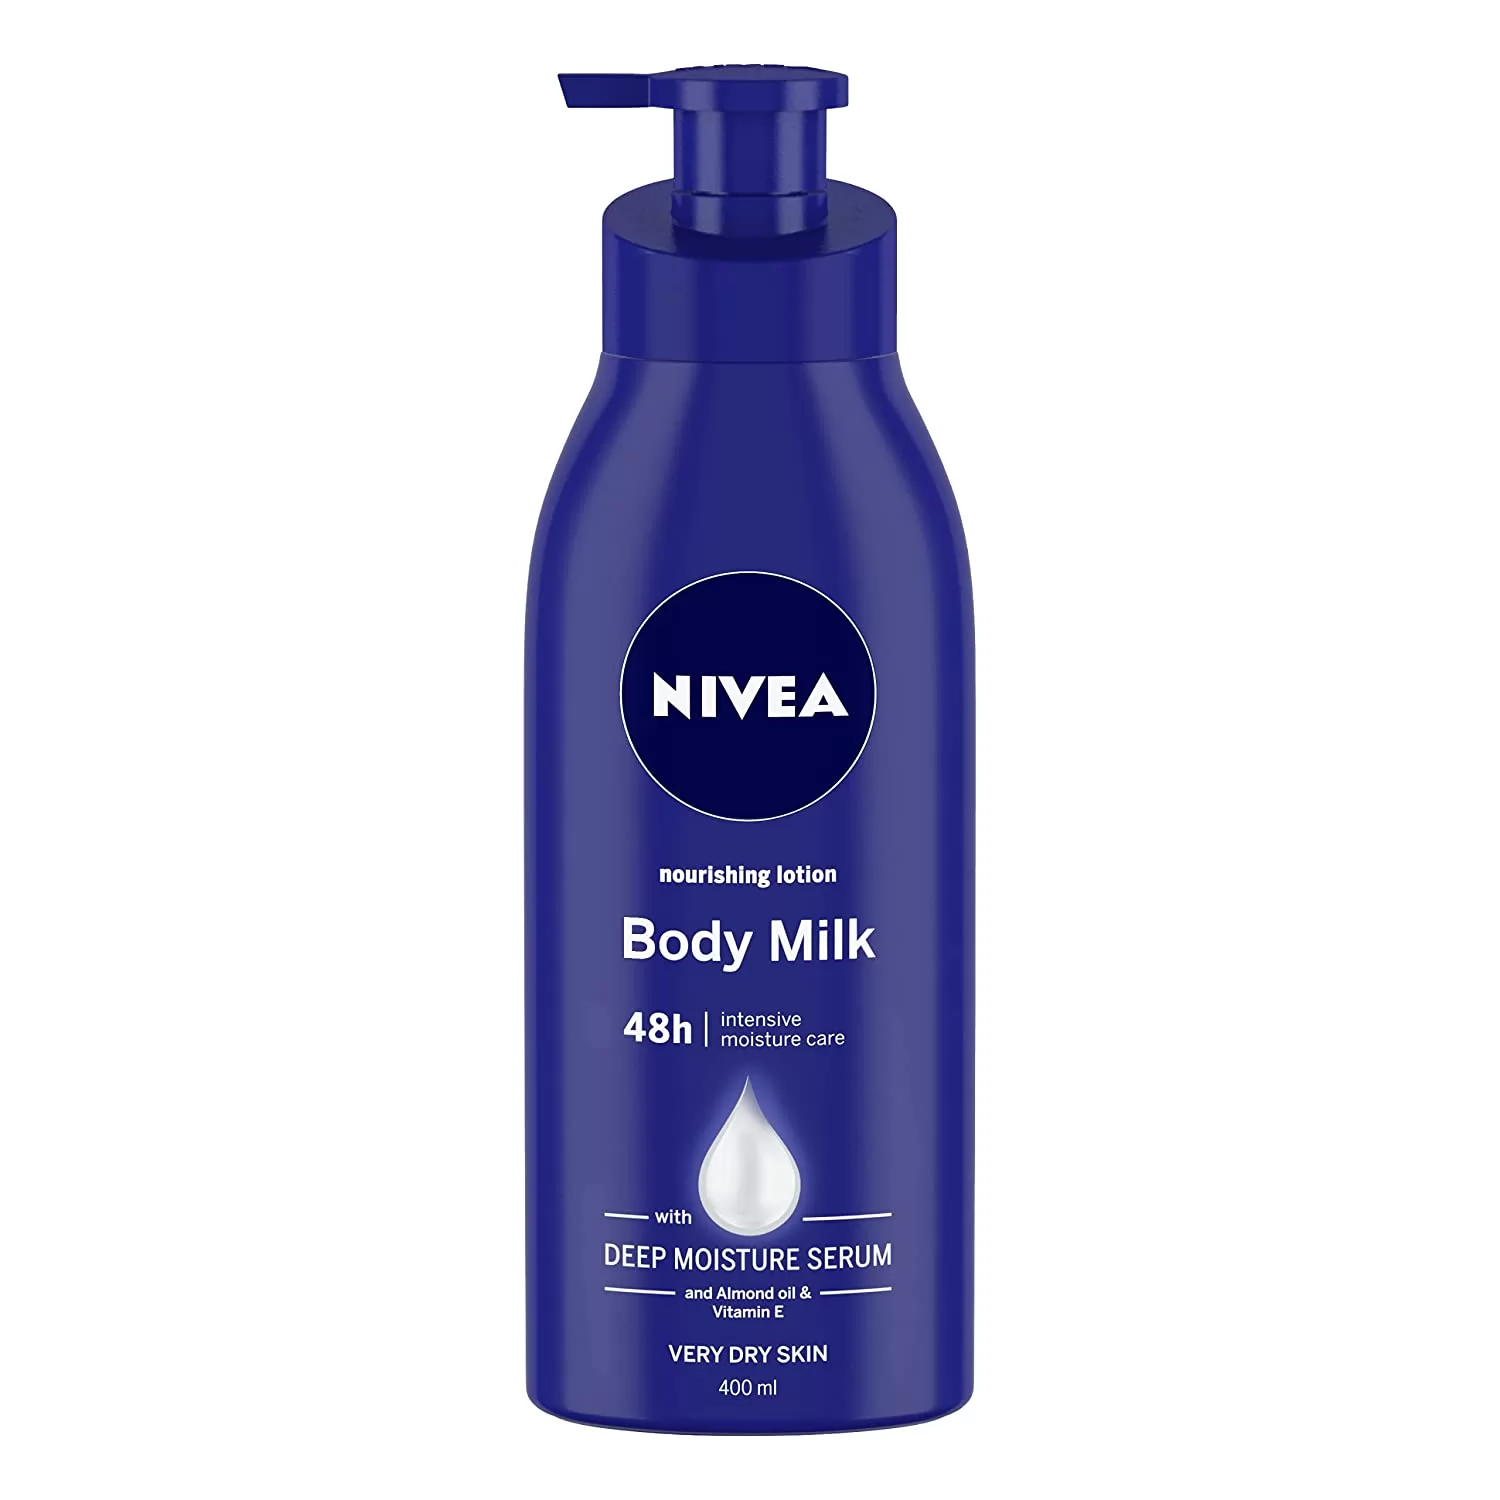 निविया नरिशिंग बॉडी मिल्क विथ आलमंड आयल एंड विटामिन ई (NIVEA Nourishing Body Milk with Almond Oil & Vitamin E)